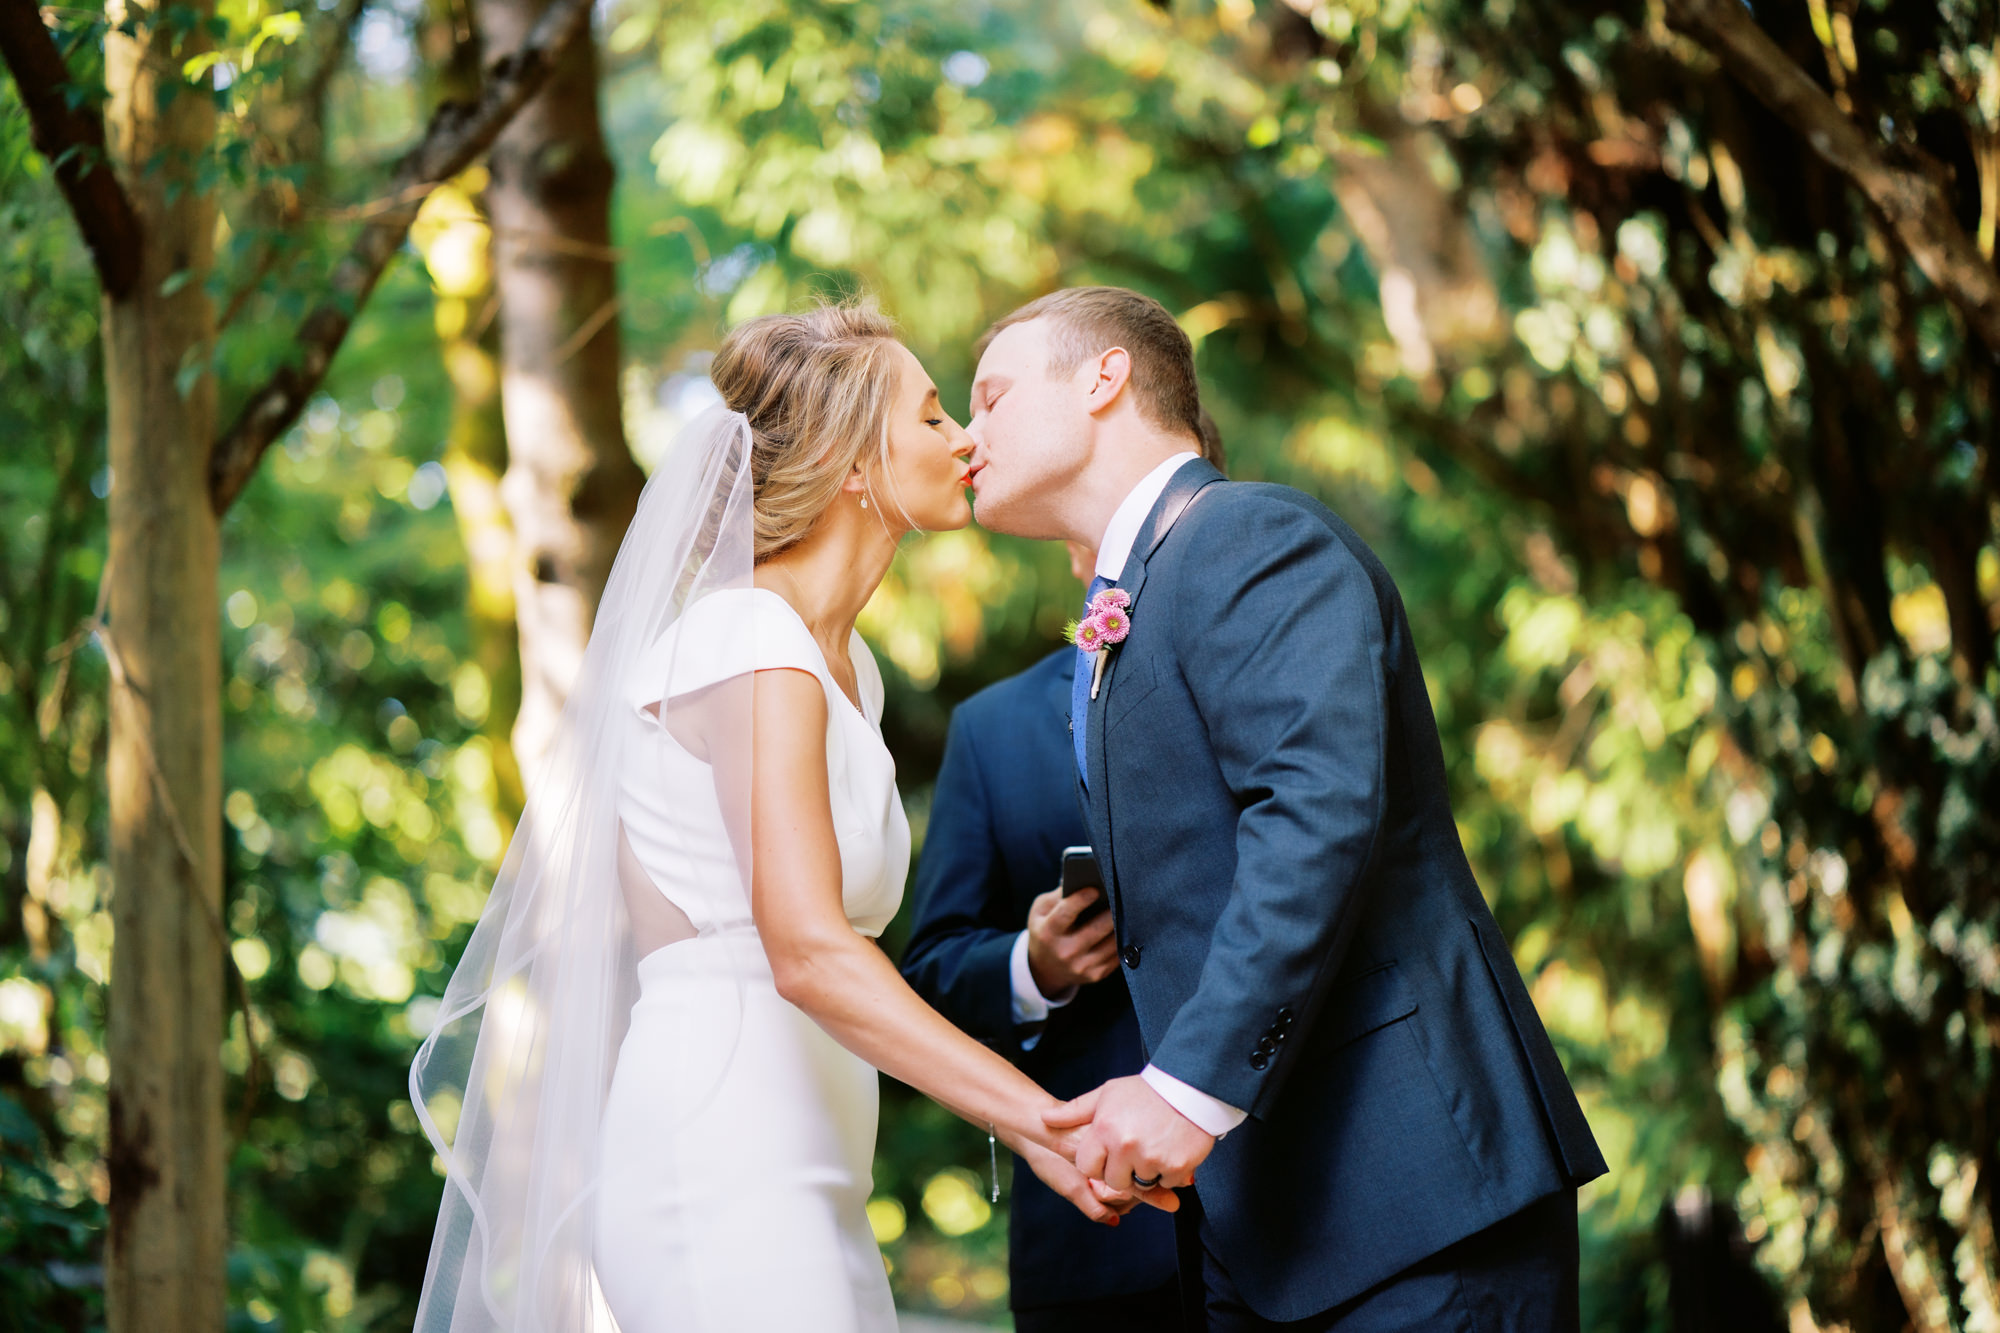 JM Cellars Wedding: Kayley and Brian's first kiss